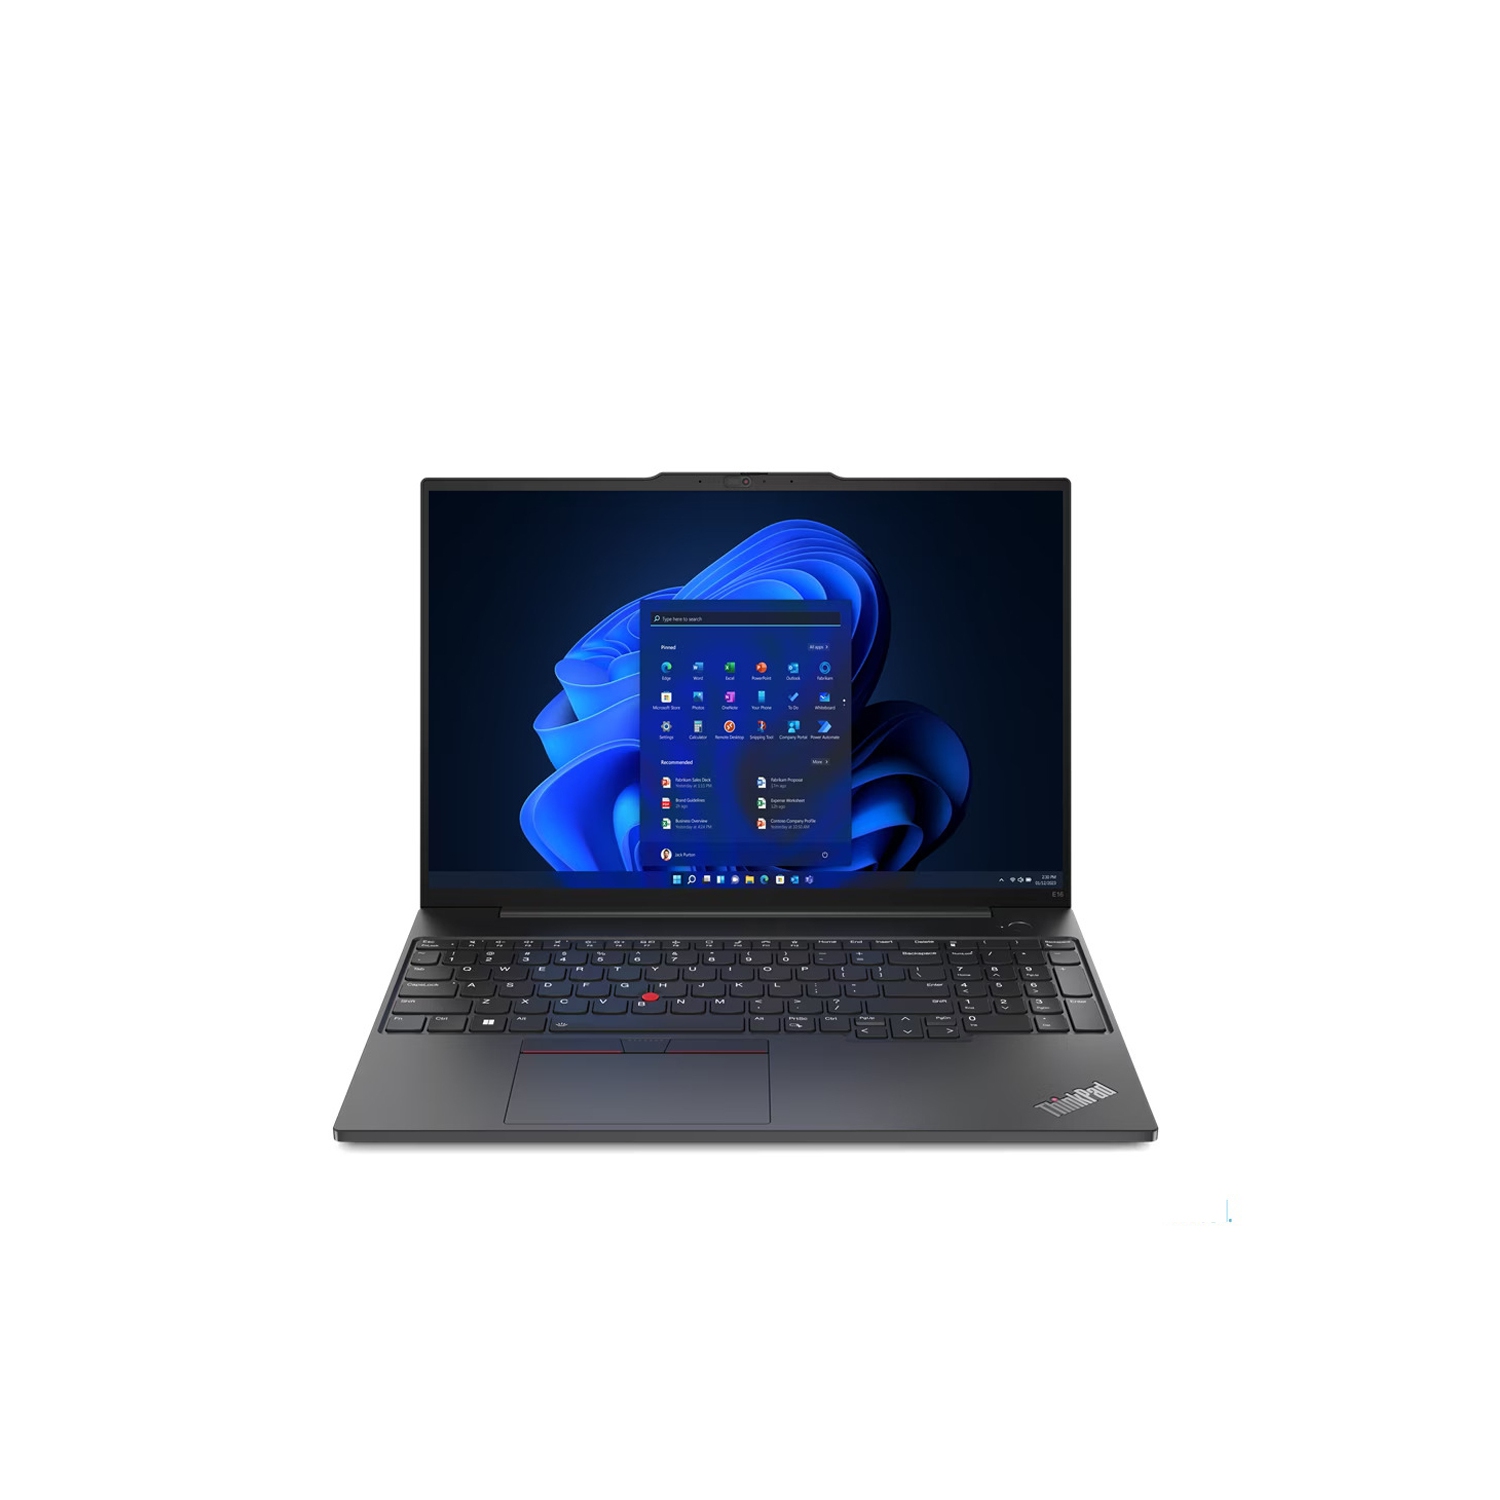 Lenovo ThinkPad E15 Gen 3, AMD Ryzen 5 5500U, 16GB RAM, 1TB SSD Storage, Win10 Pro